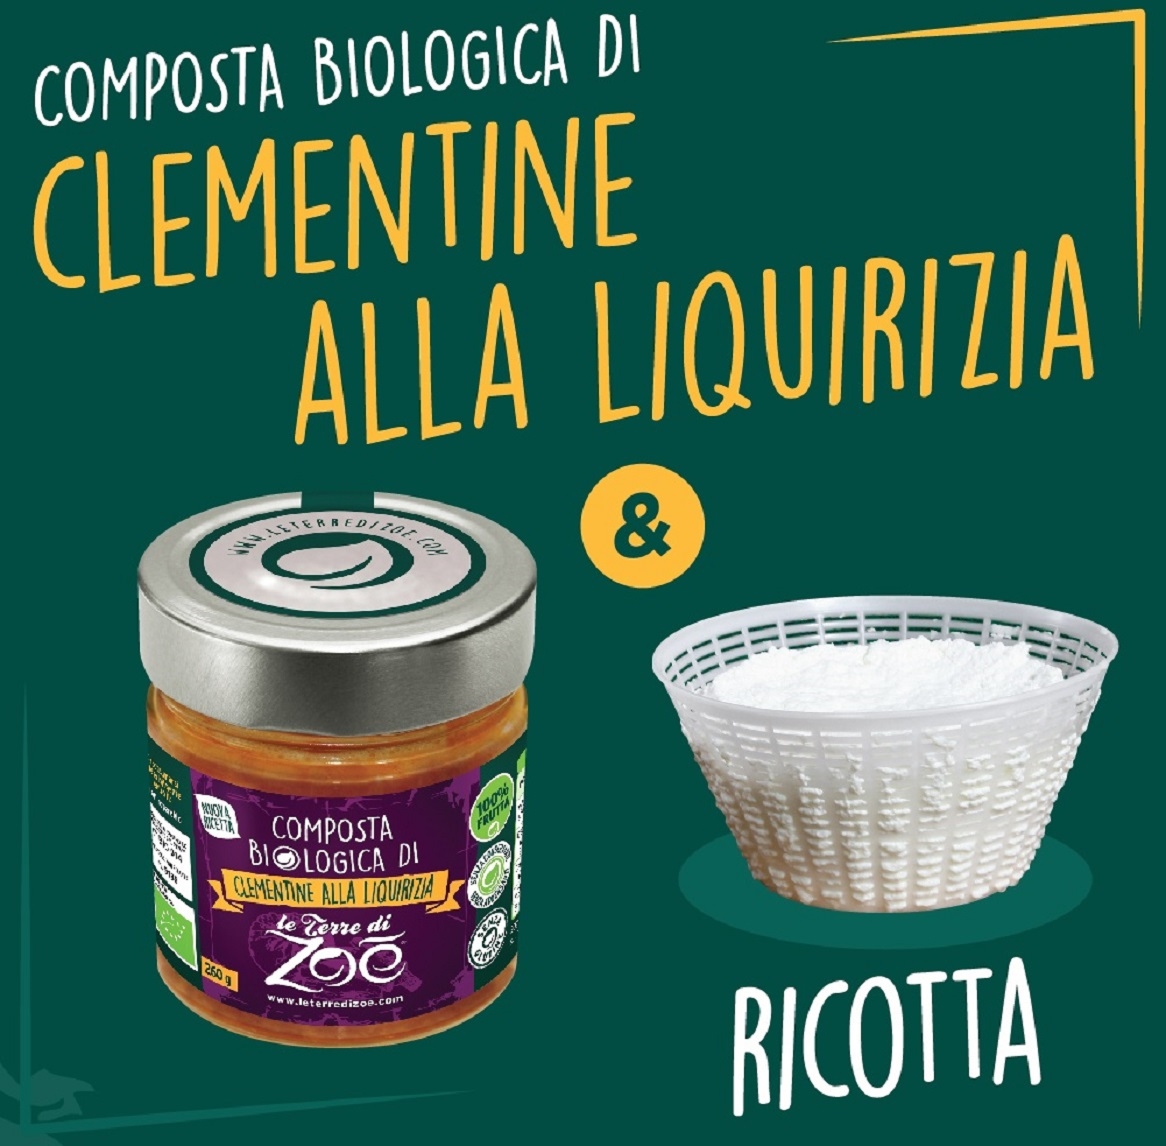 Italienisches Clementinen und Lakritze Kompotte Le terre di zoè 4